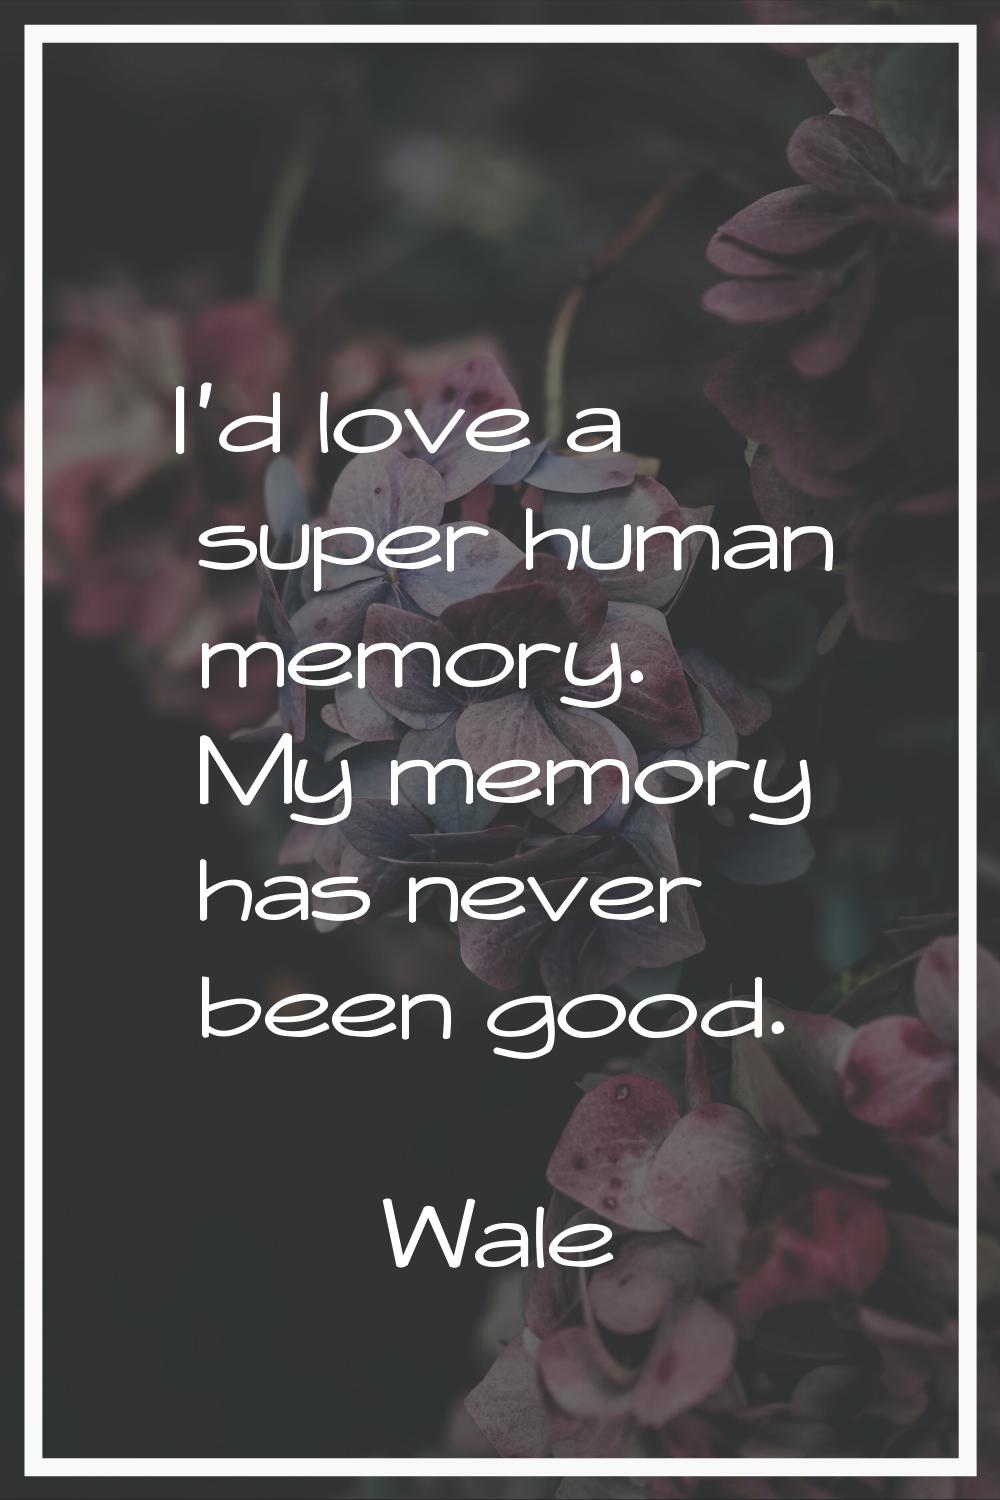 I'd love a super human memory. My memory has never been good.